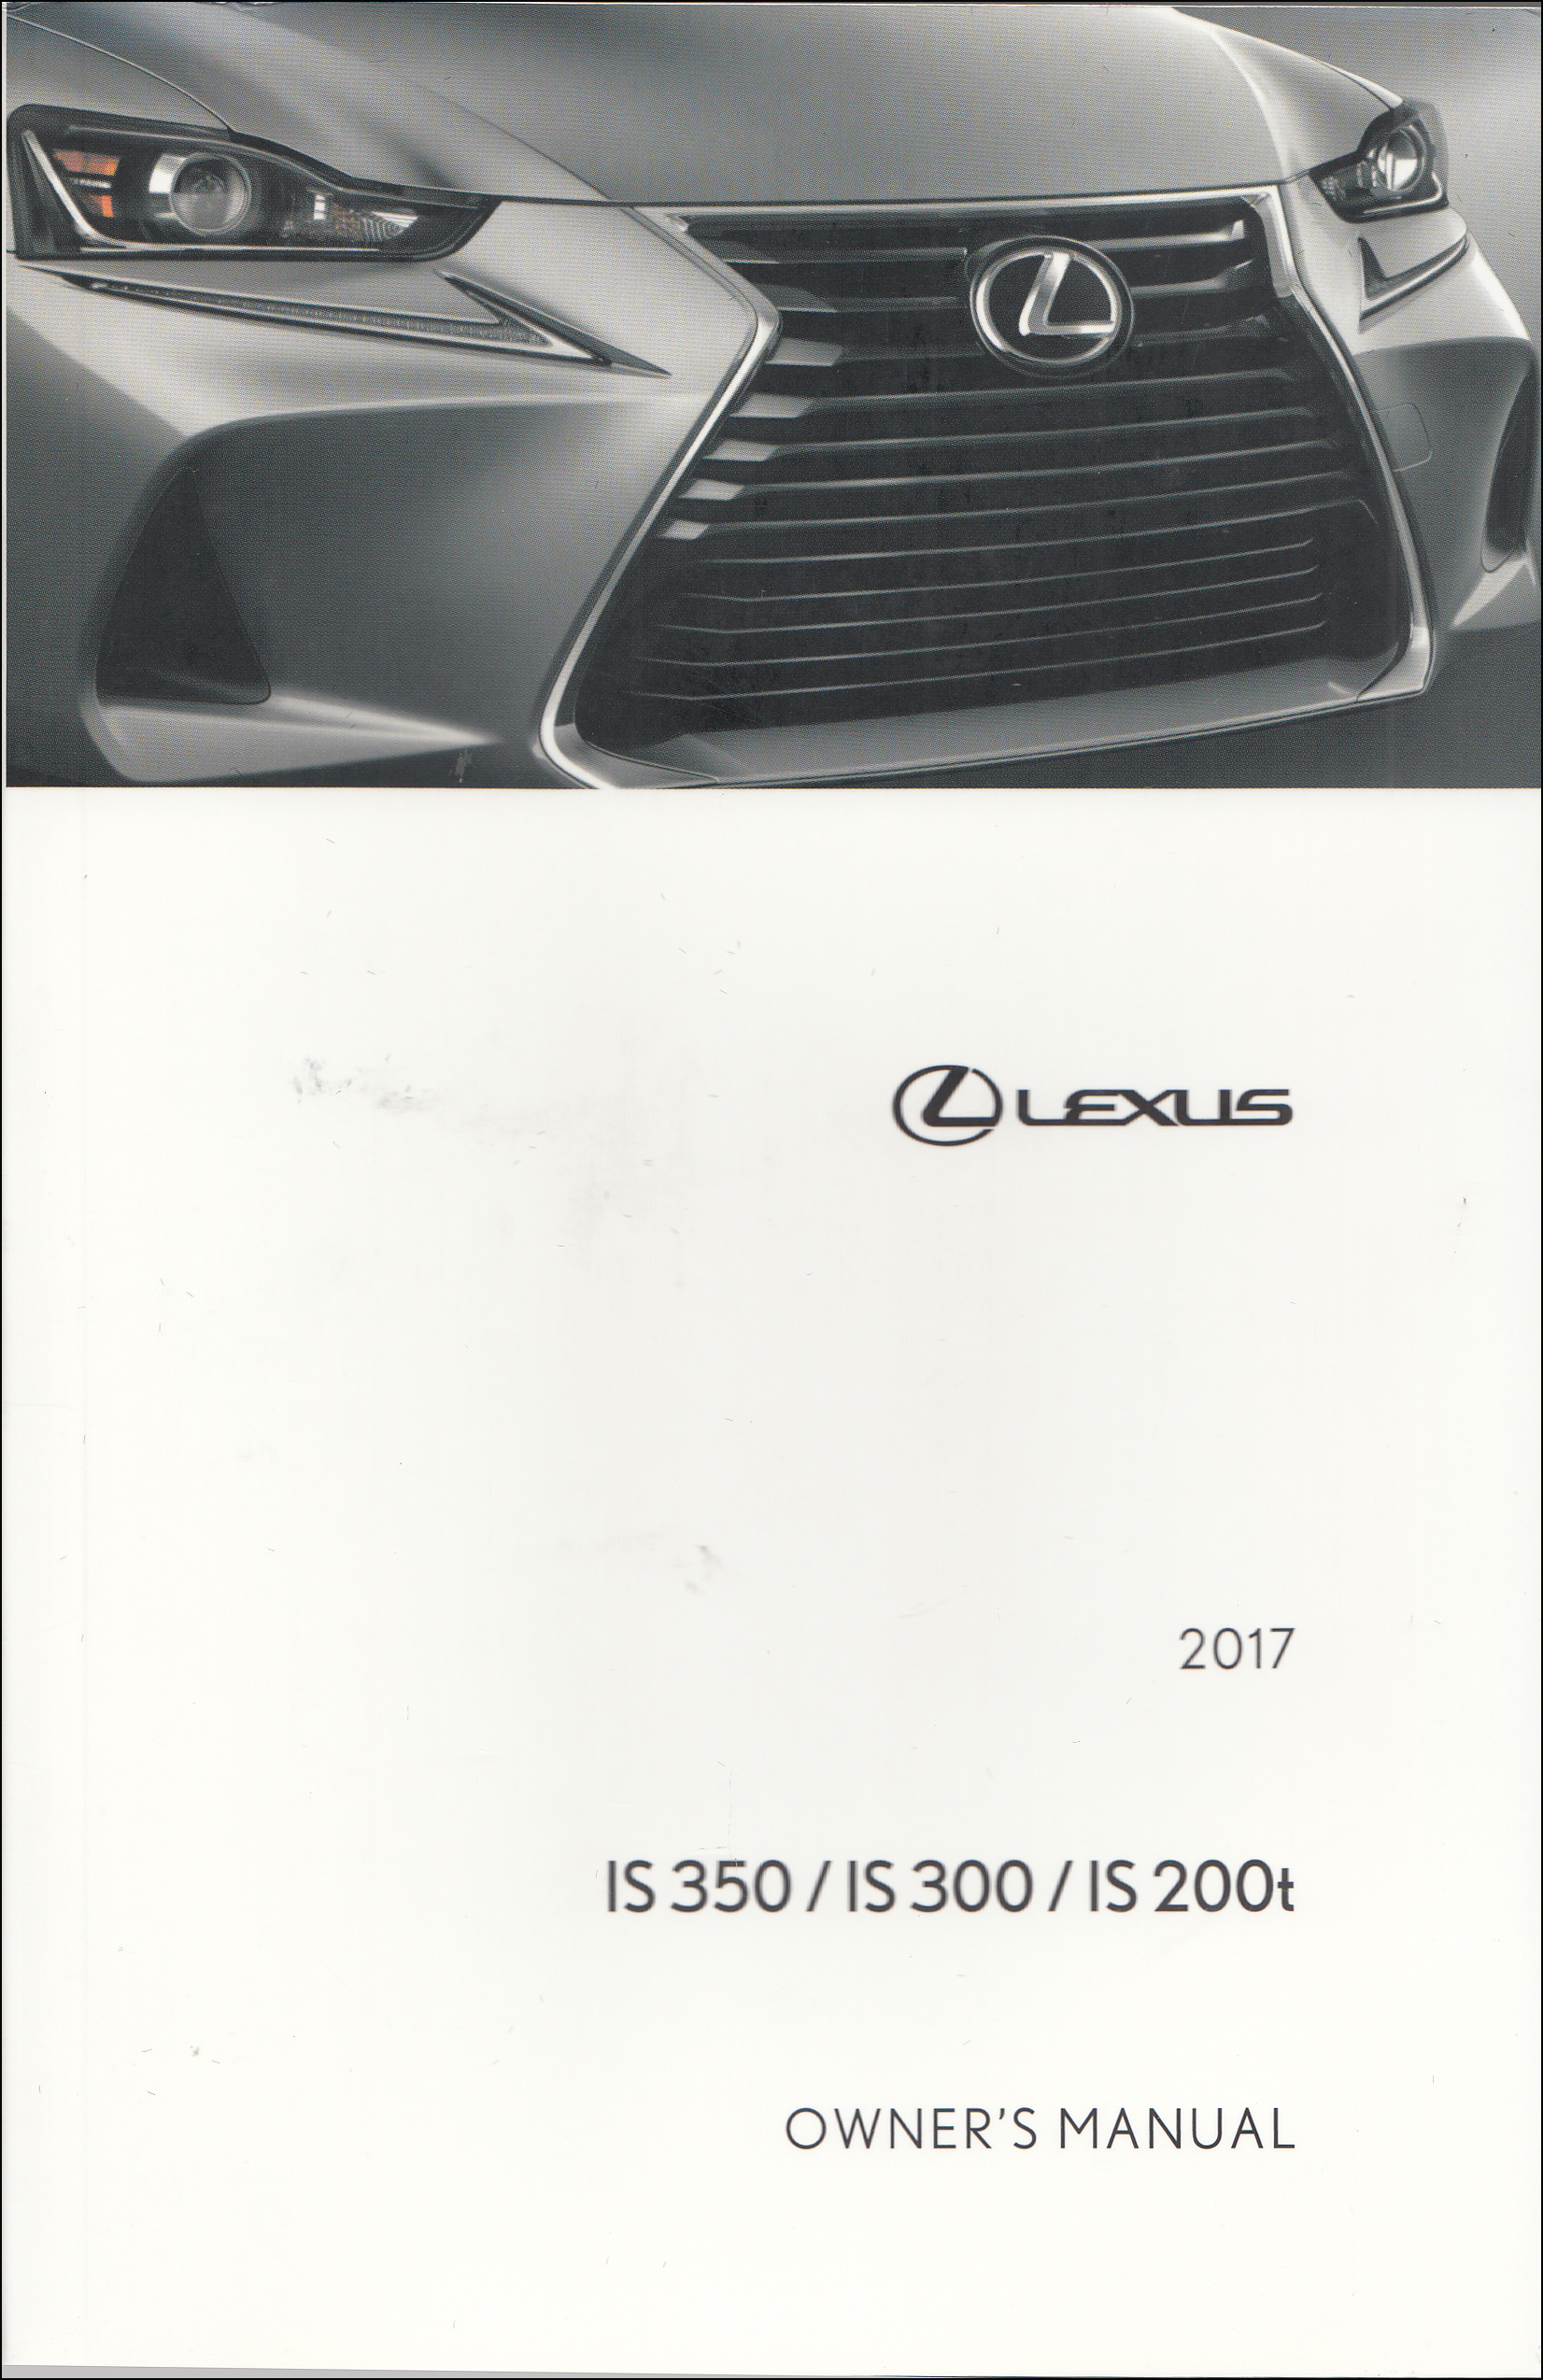 2017 Lexus IS Owner's Manual Original 200t/300/350